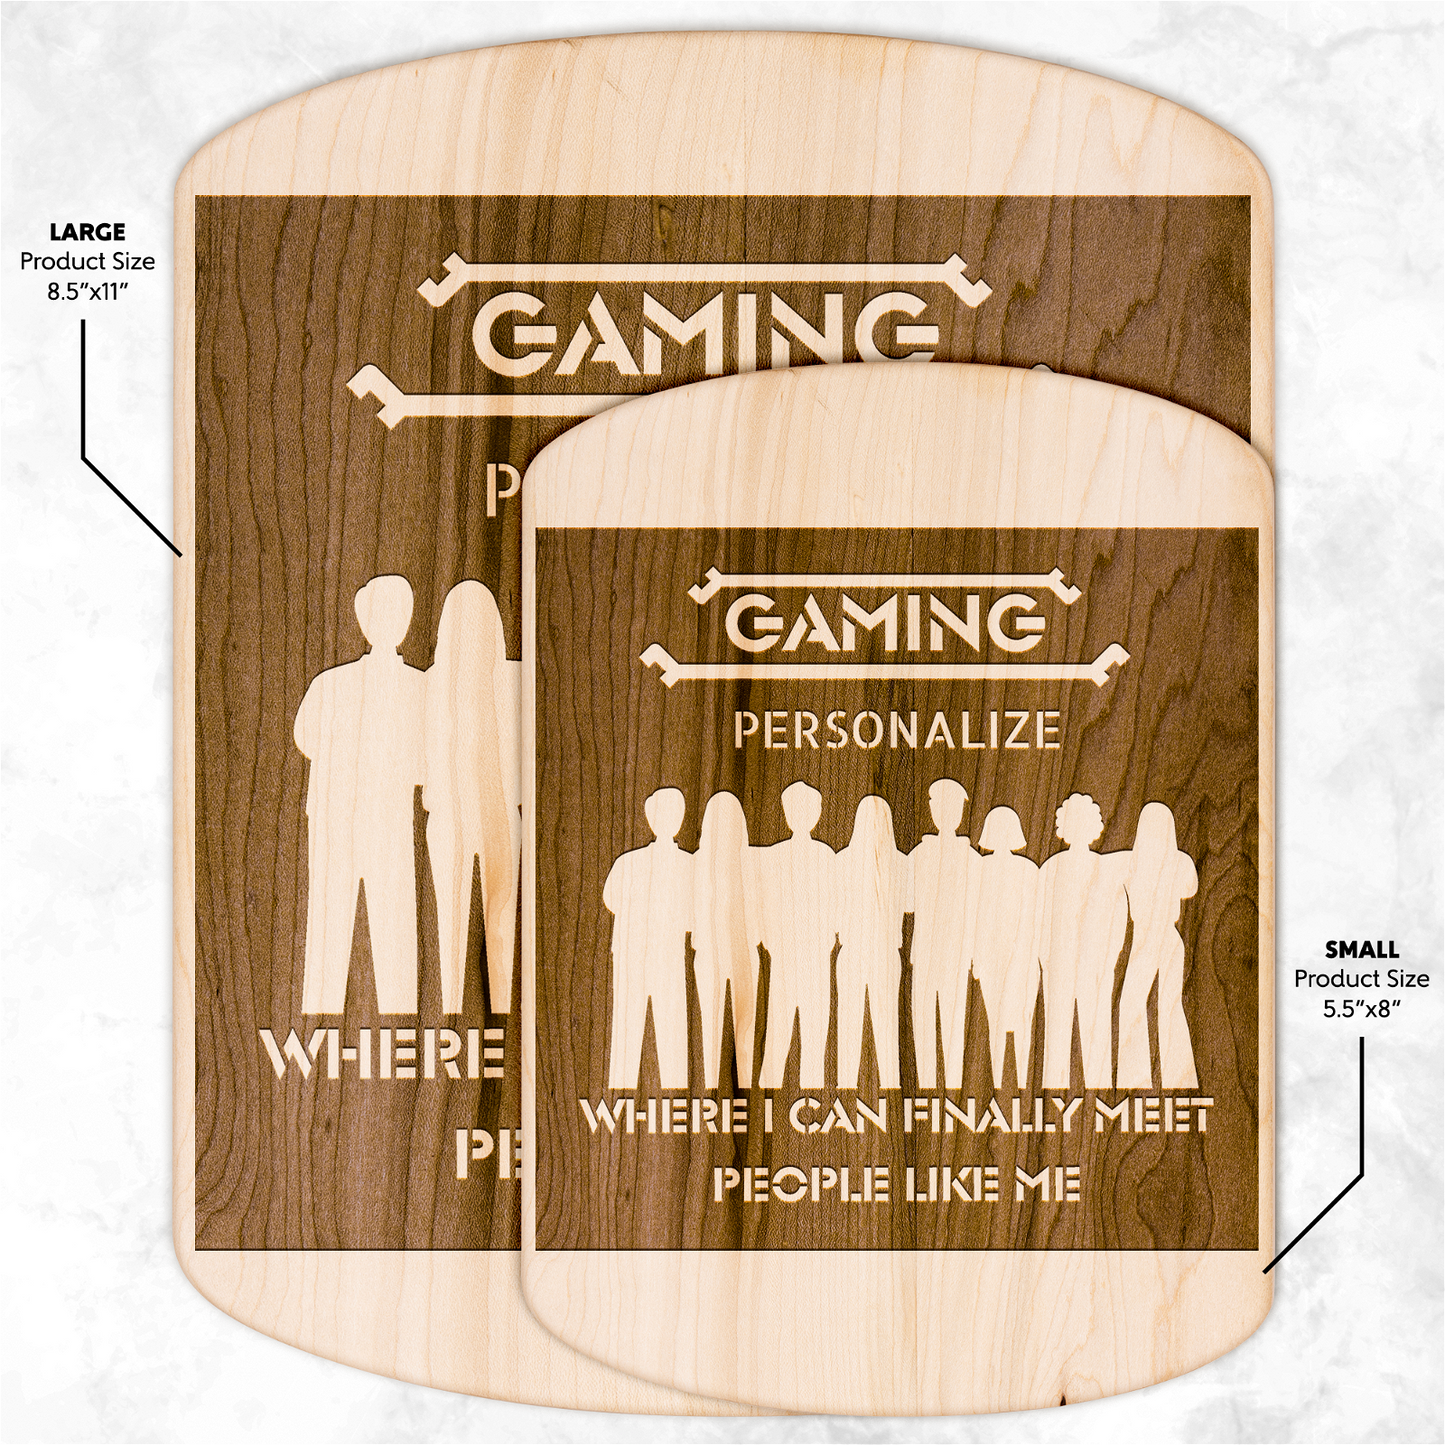 Gamers Community Kitchen Hardwood Oval Cutting Board - Iron Phoenix GHG